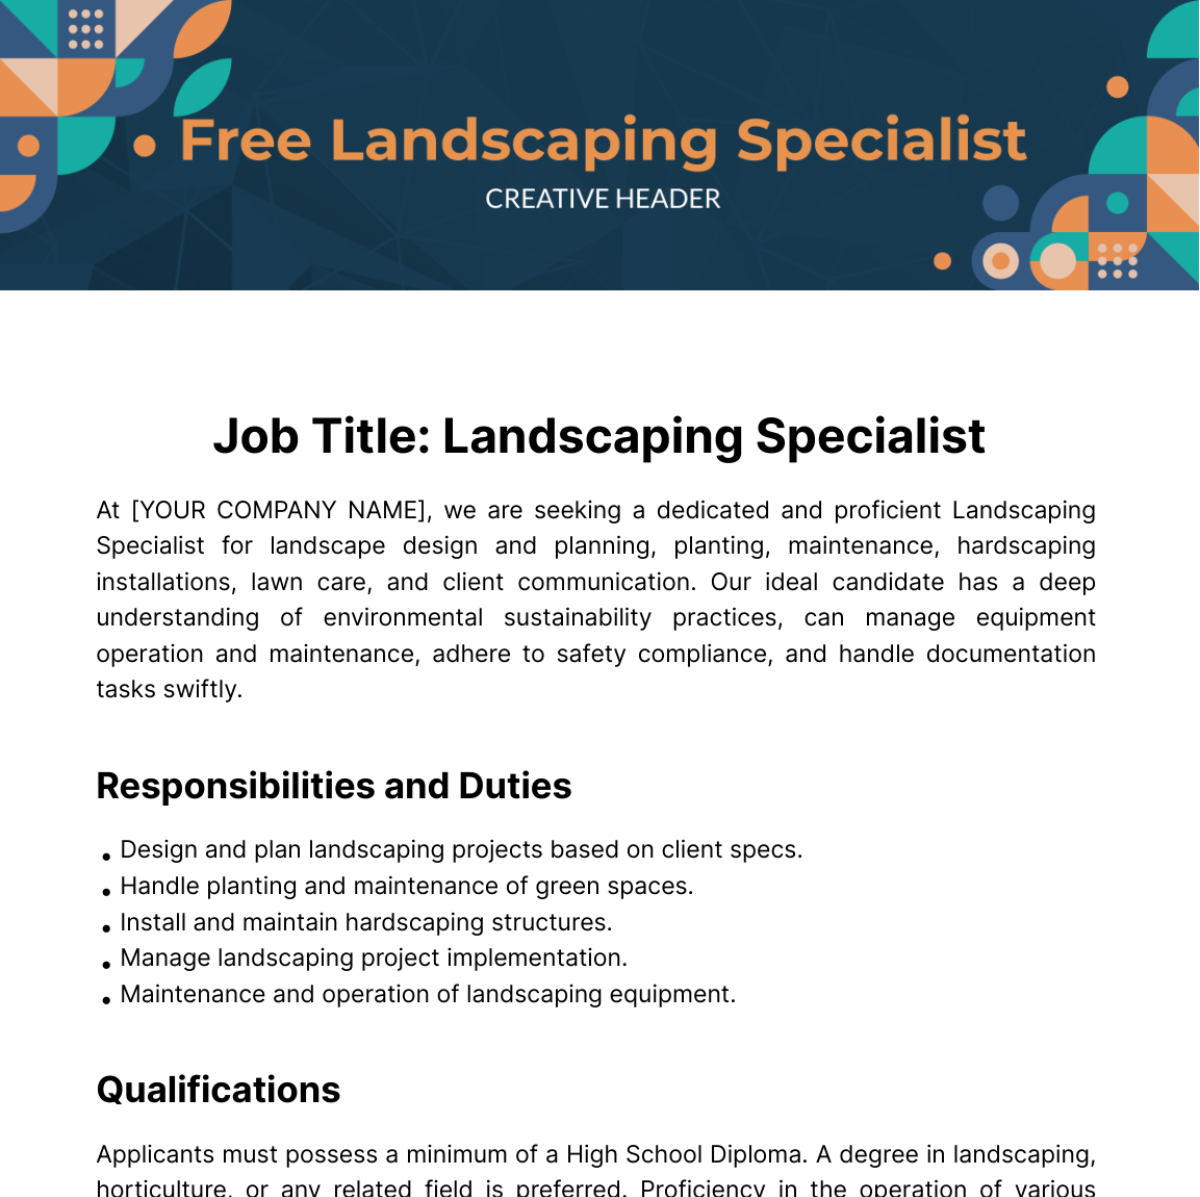 Free Landscaping Specialist Job Description Template